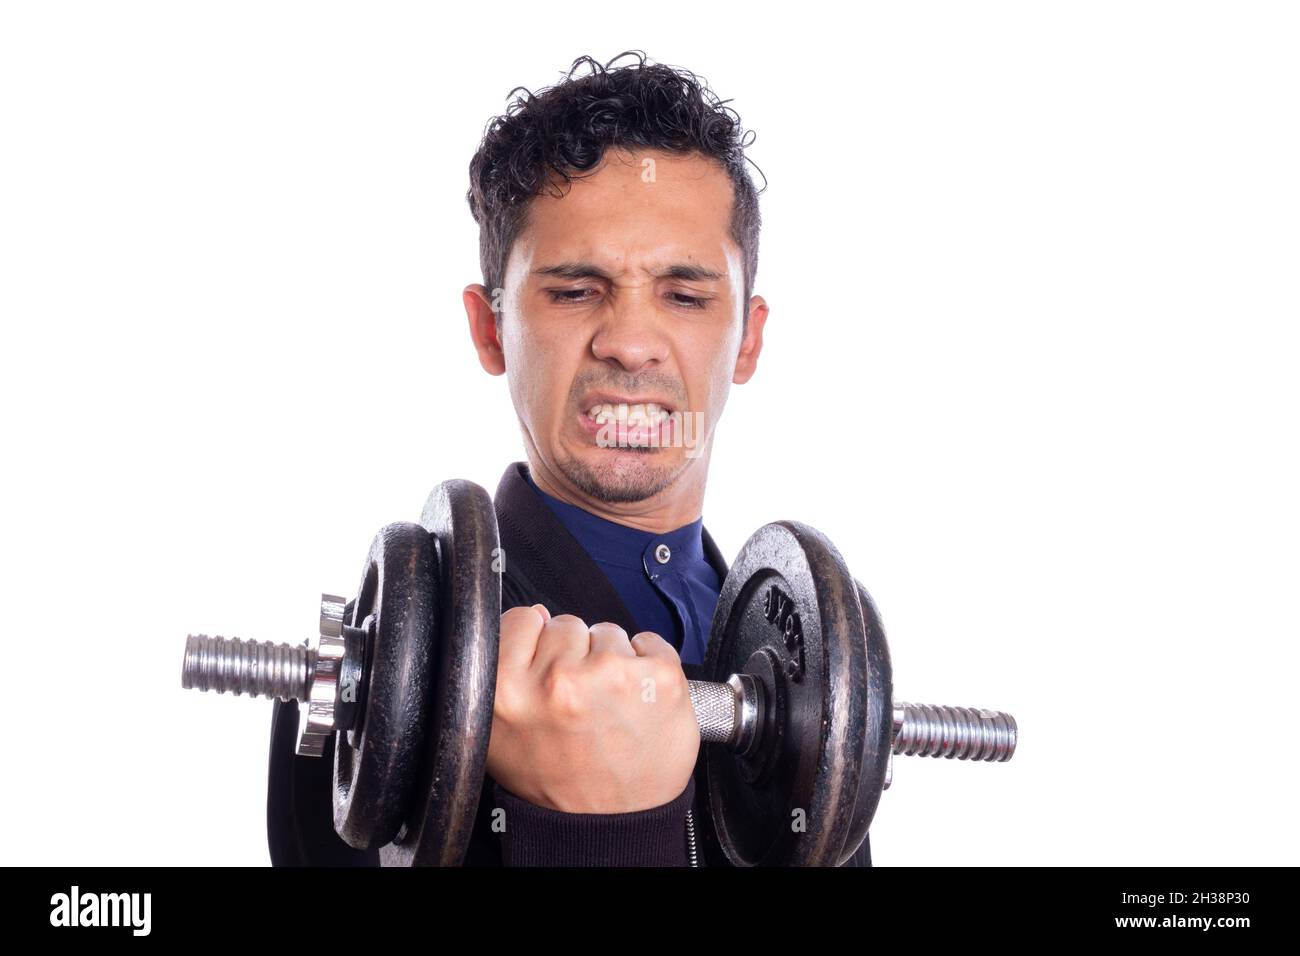 weak man in gym